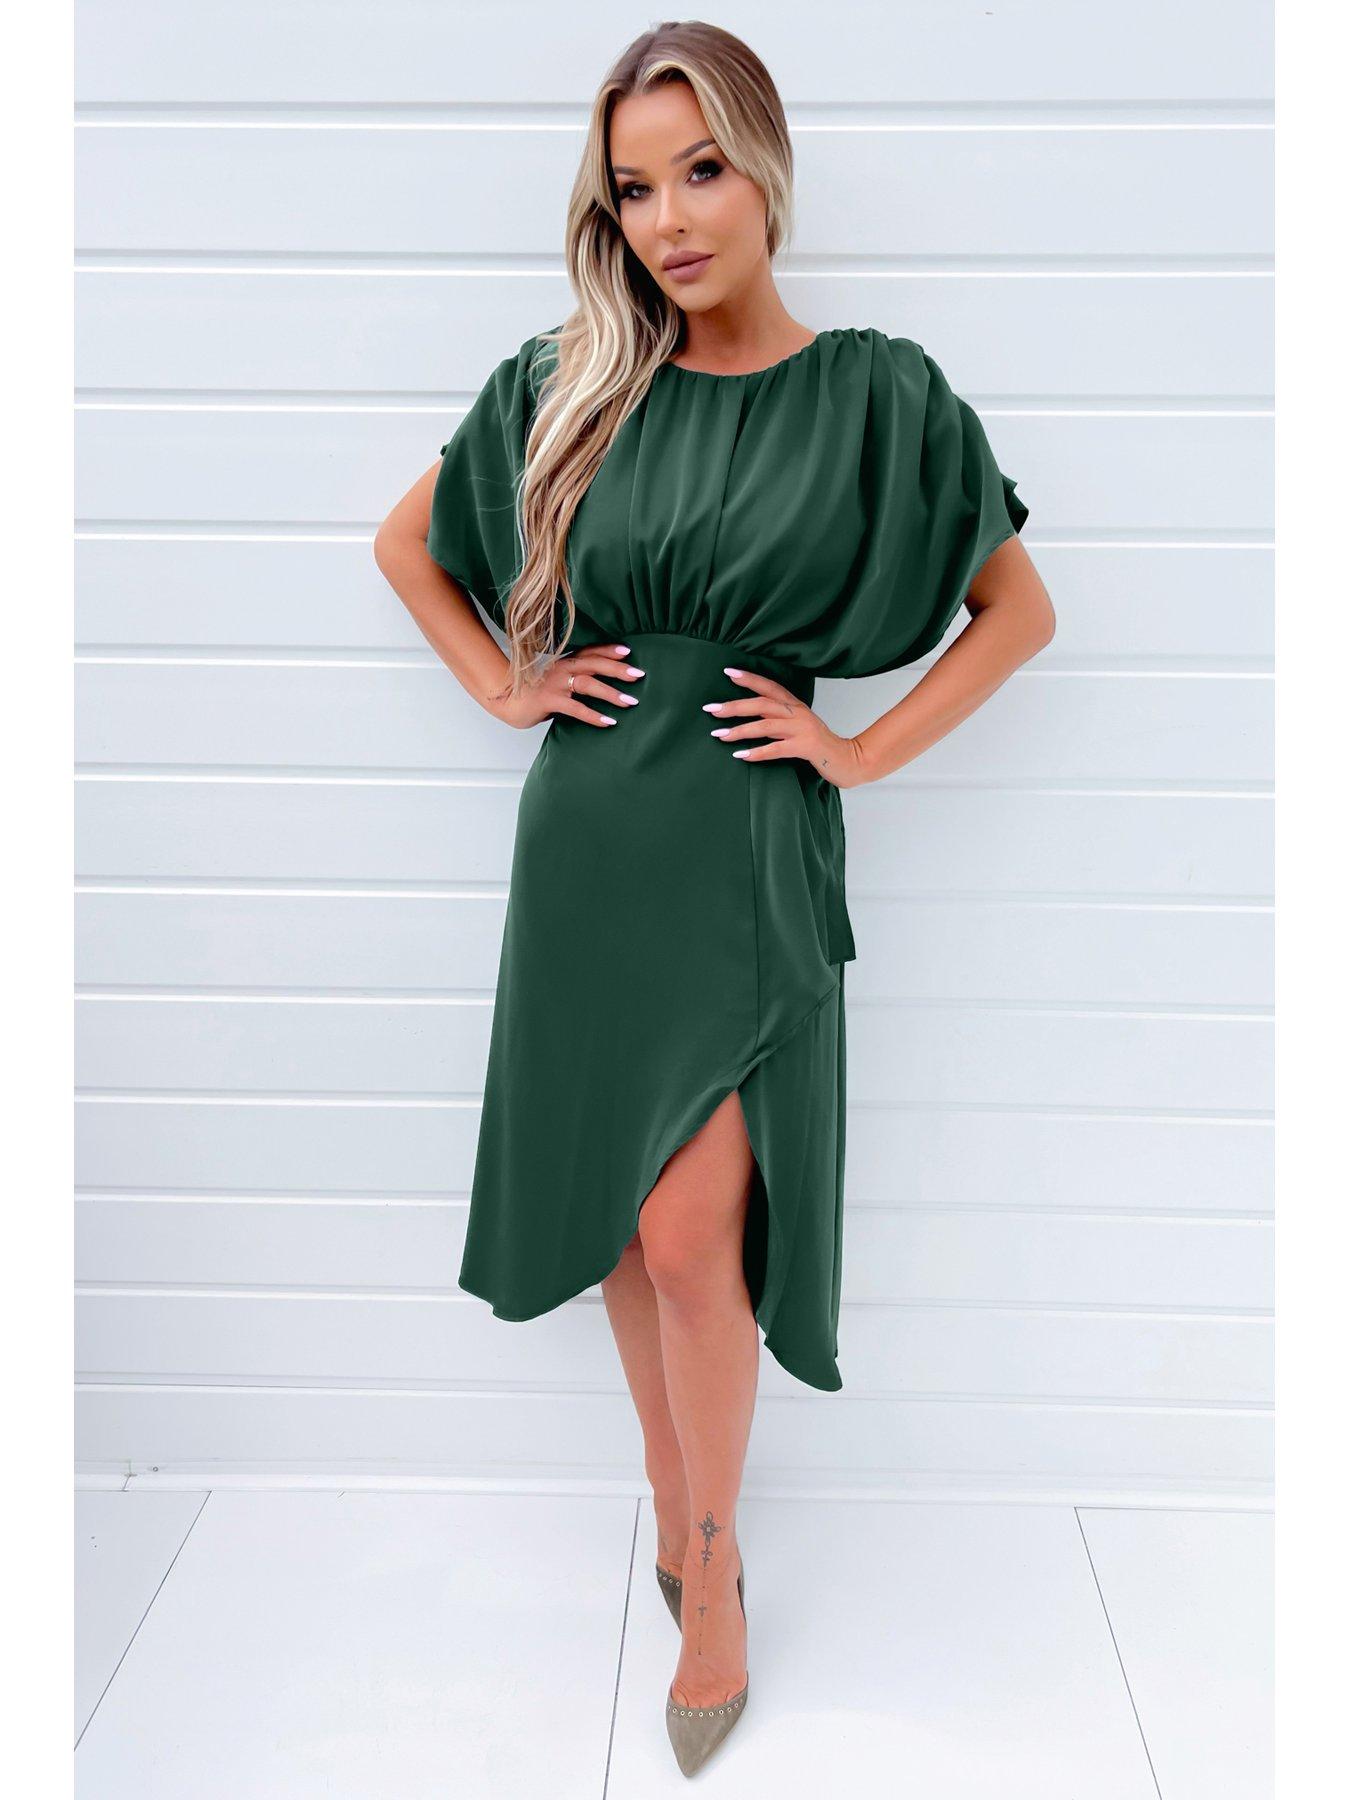 Emerald dress, pink shoes | Fashion, Green dress, Style